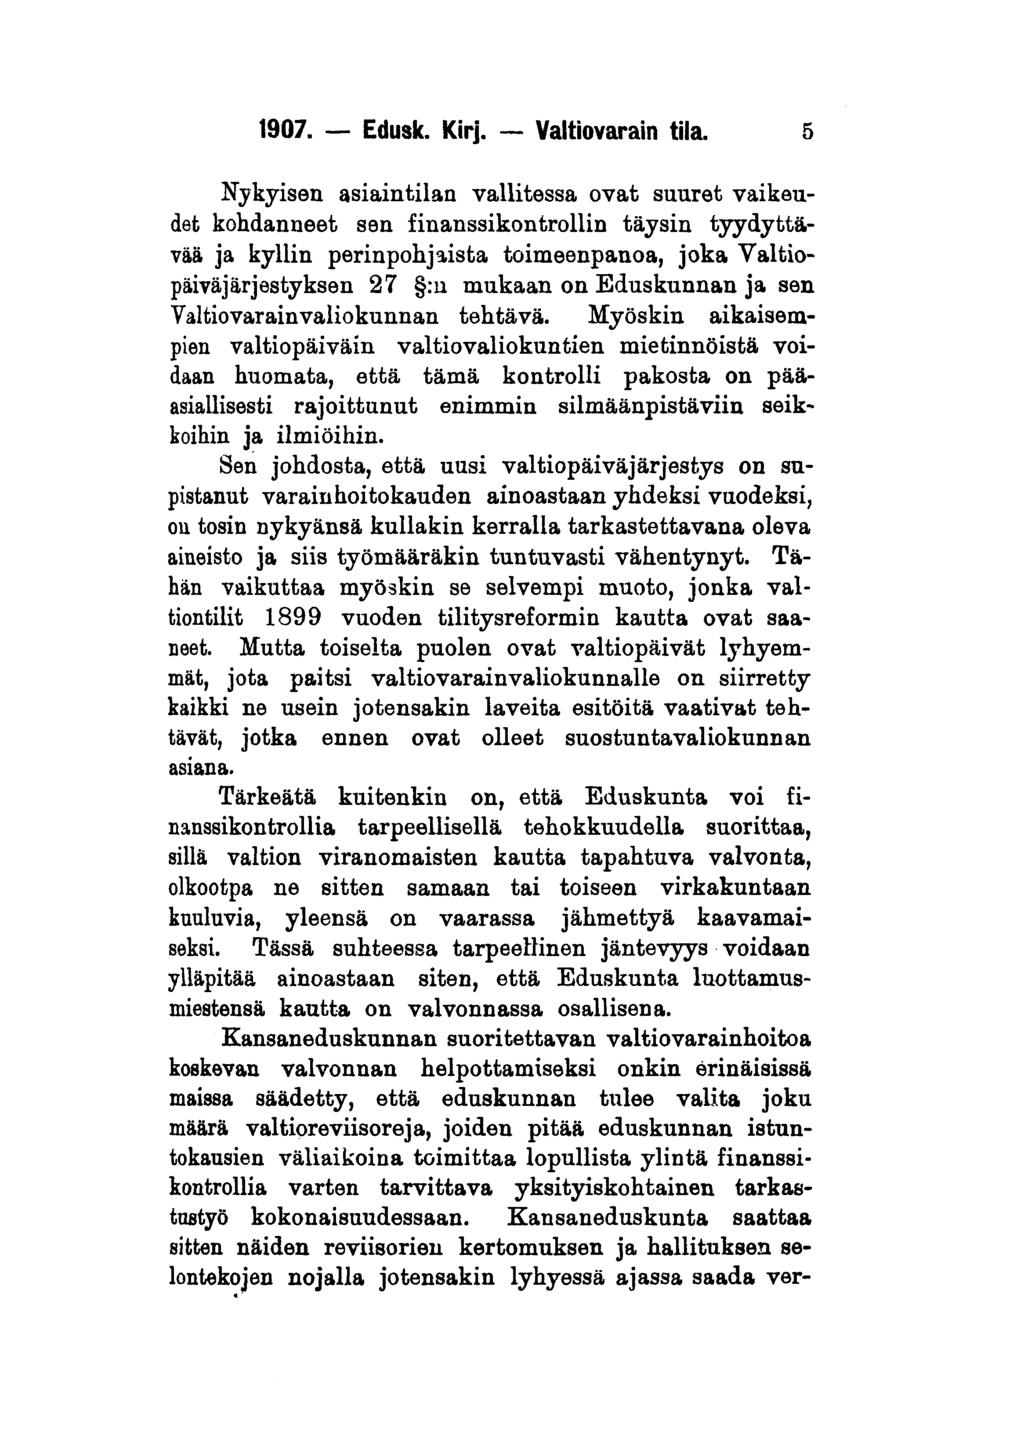 1907. Edusk. Kirj. Valtiovarain tila.